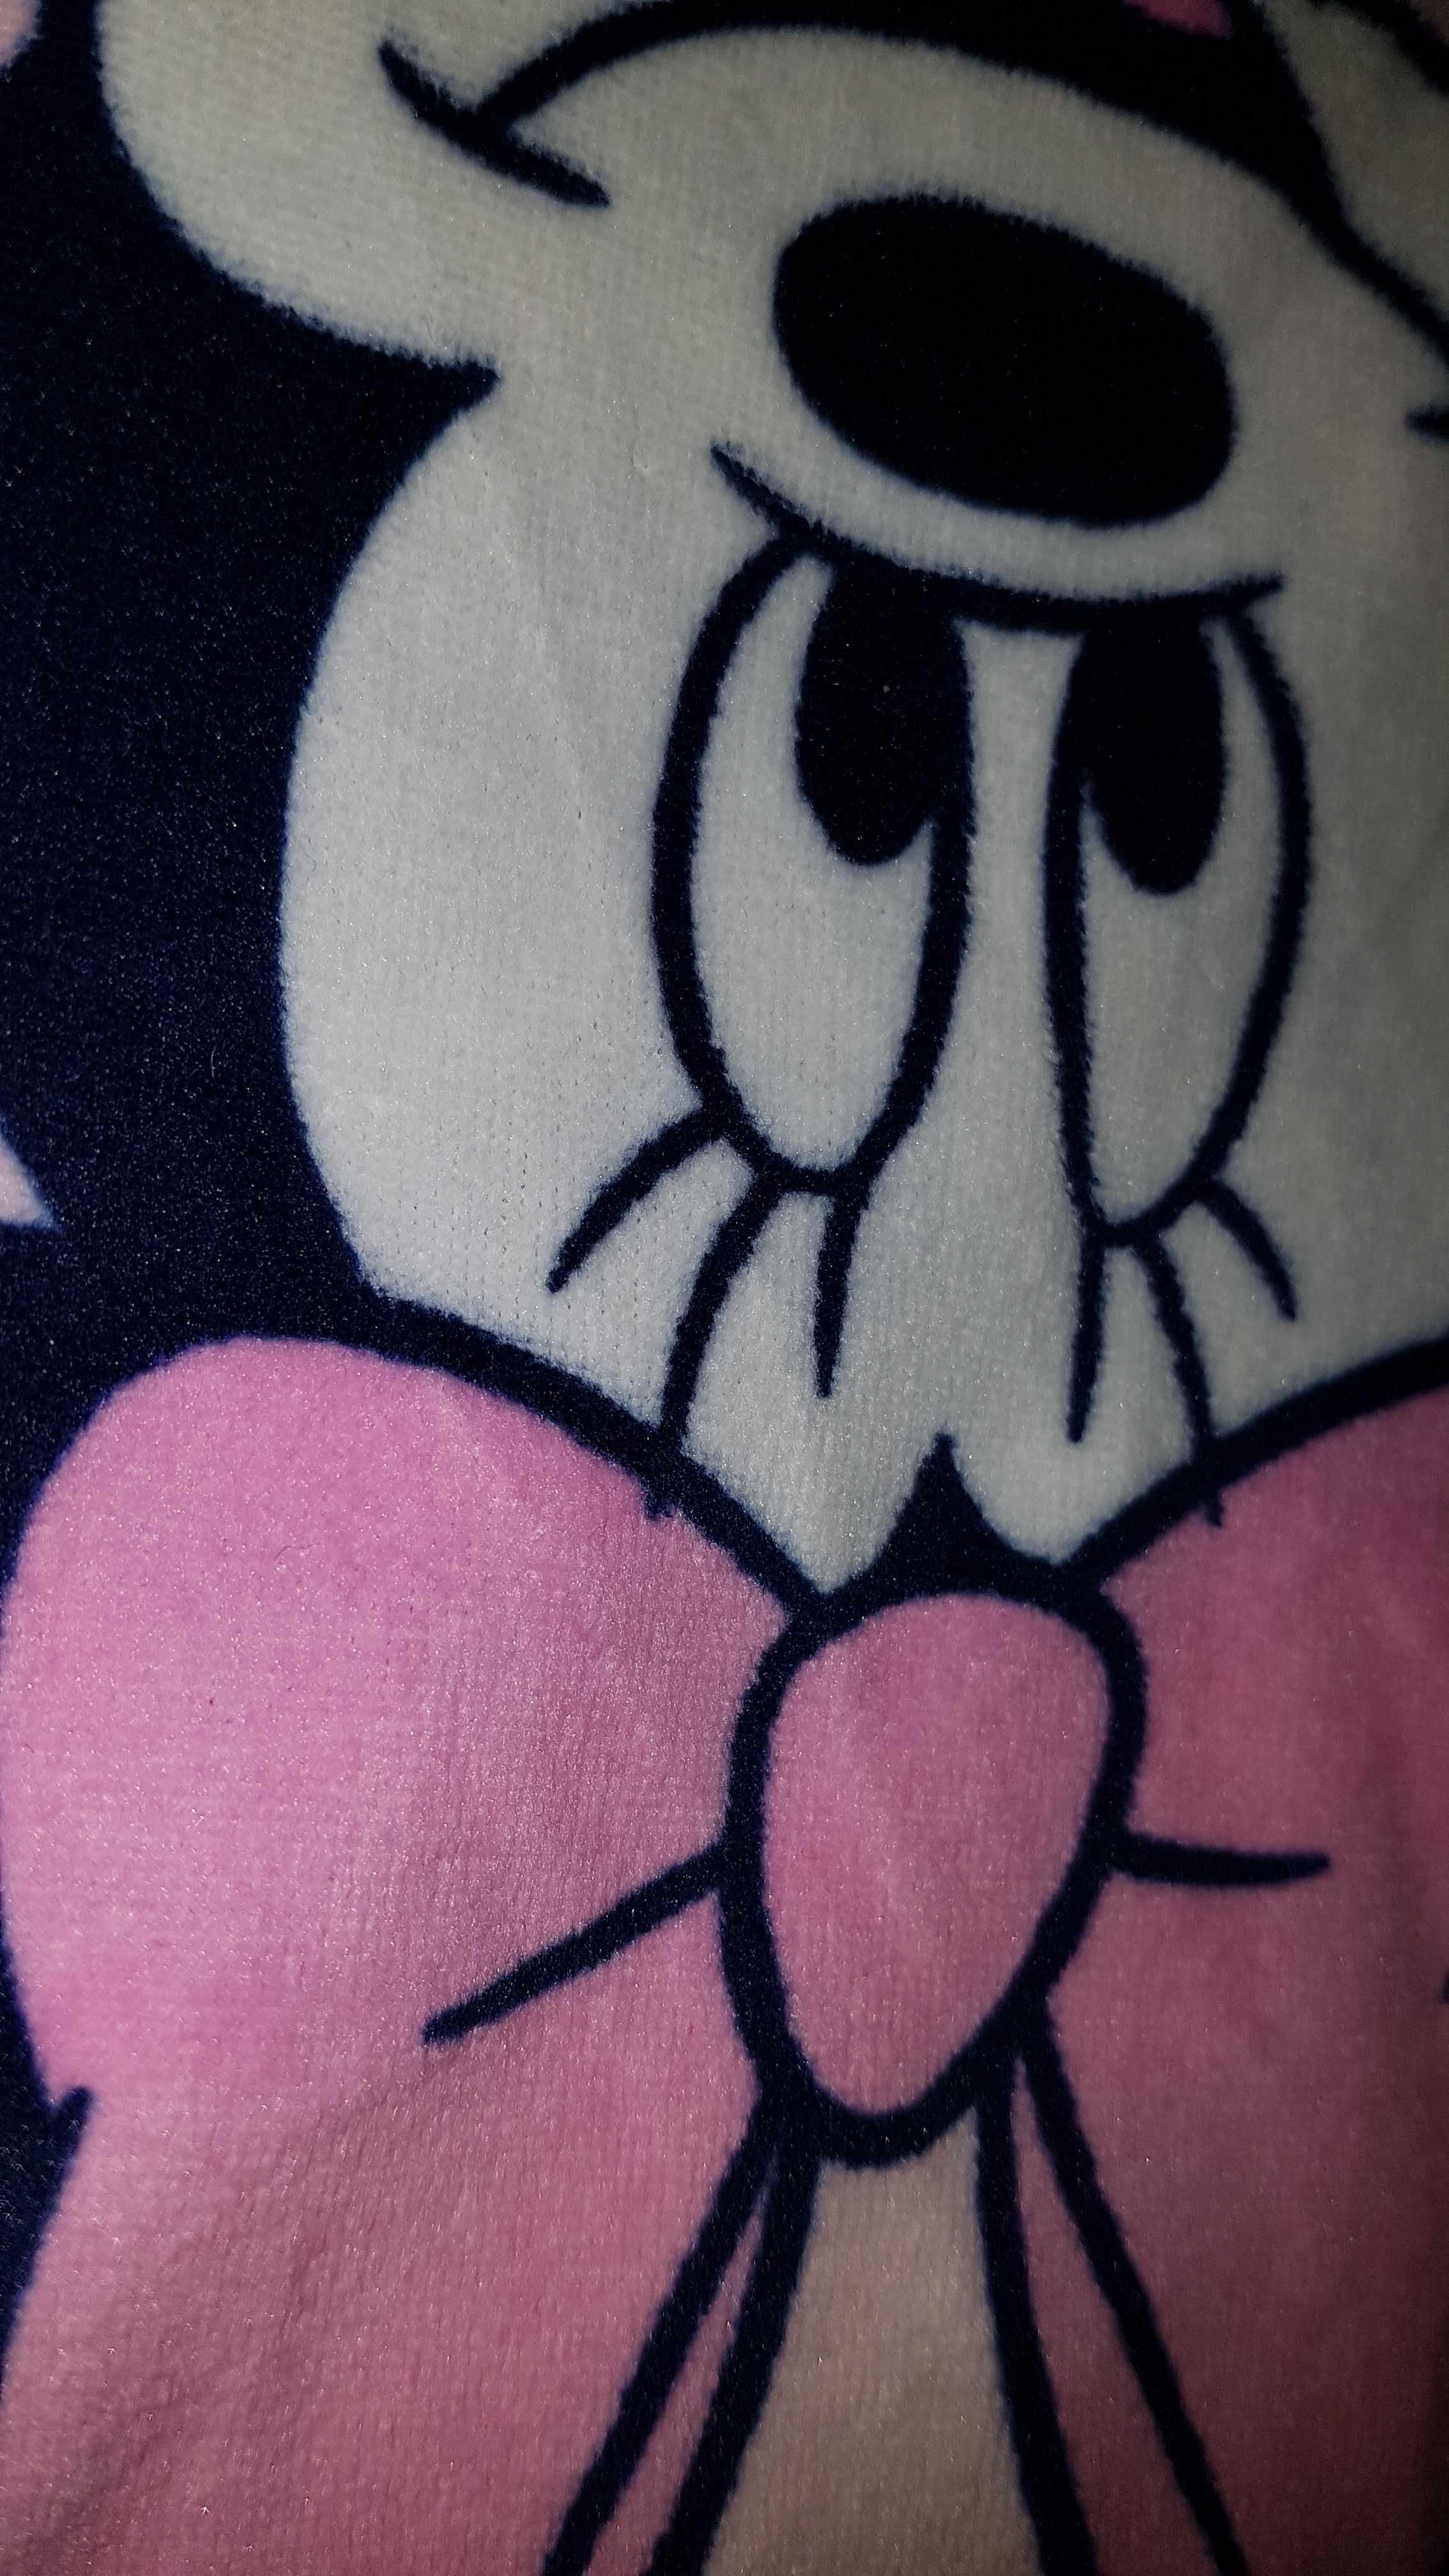 Очень яркий теплый комплект, пижамка велюр Minnie Mouse Disney р-р L